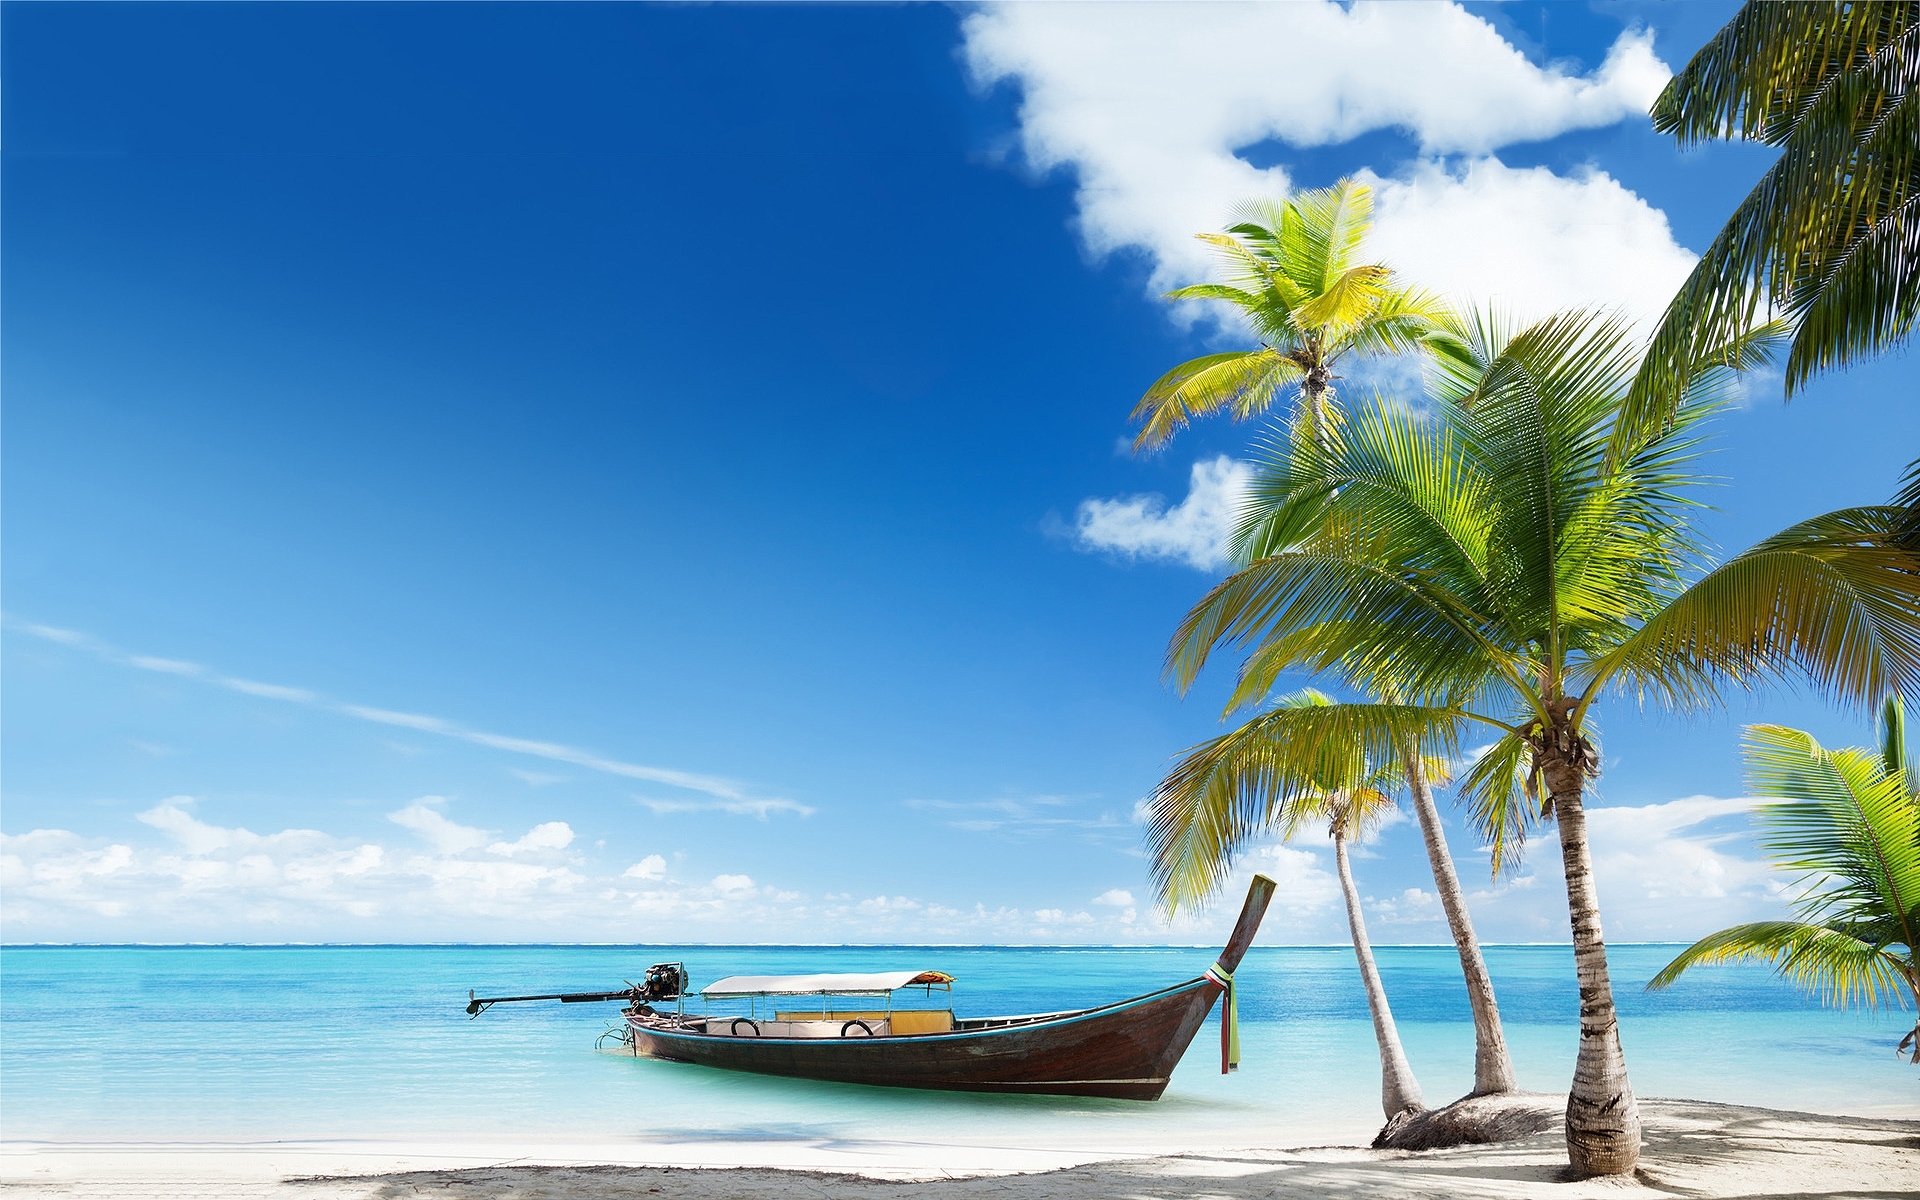 10 Best Tropical Beach Wallpaper Desktop FULL HD 1080p For PC Desktop 2020